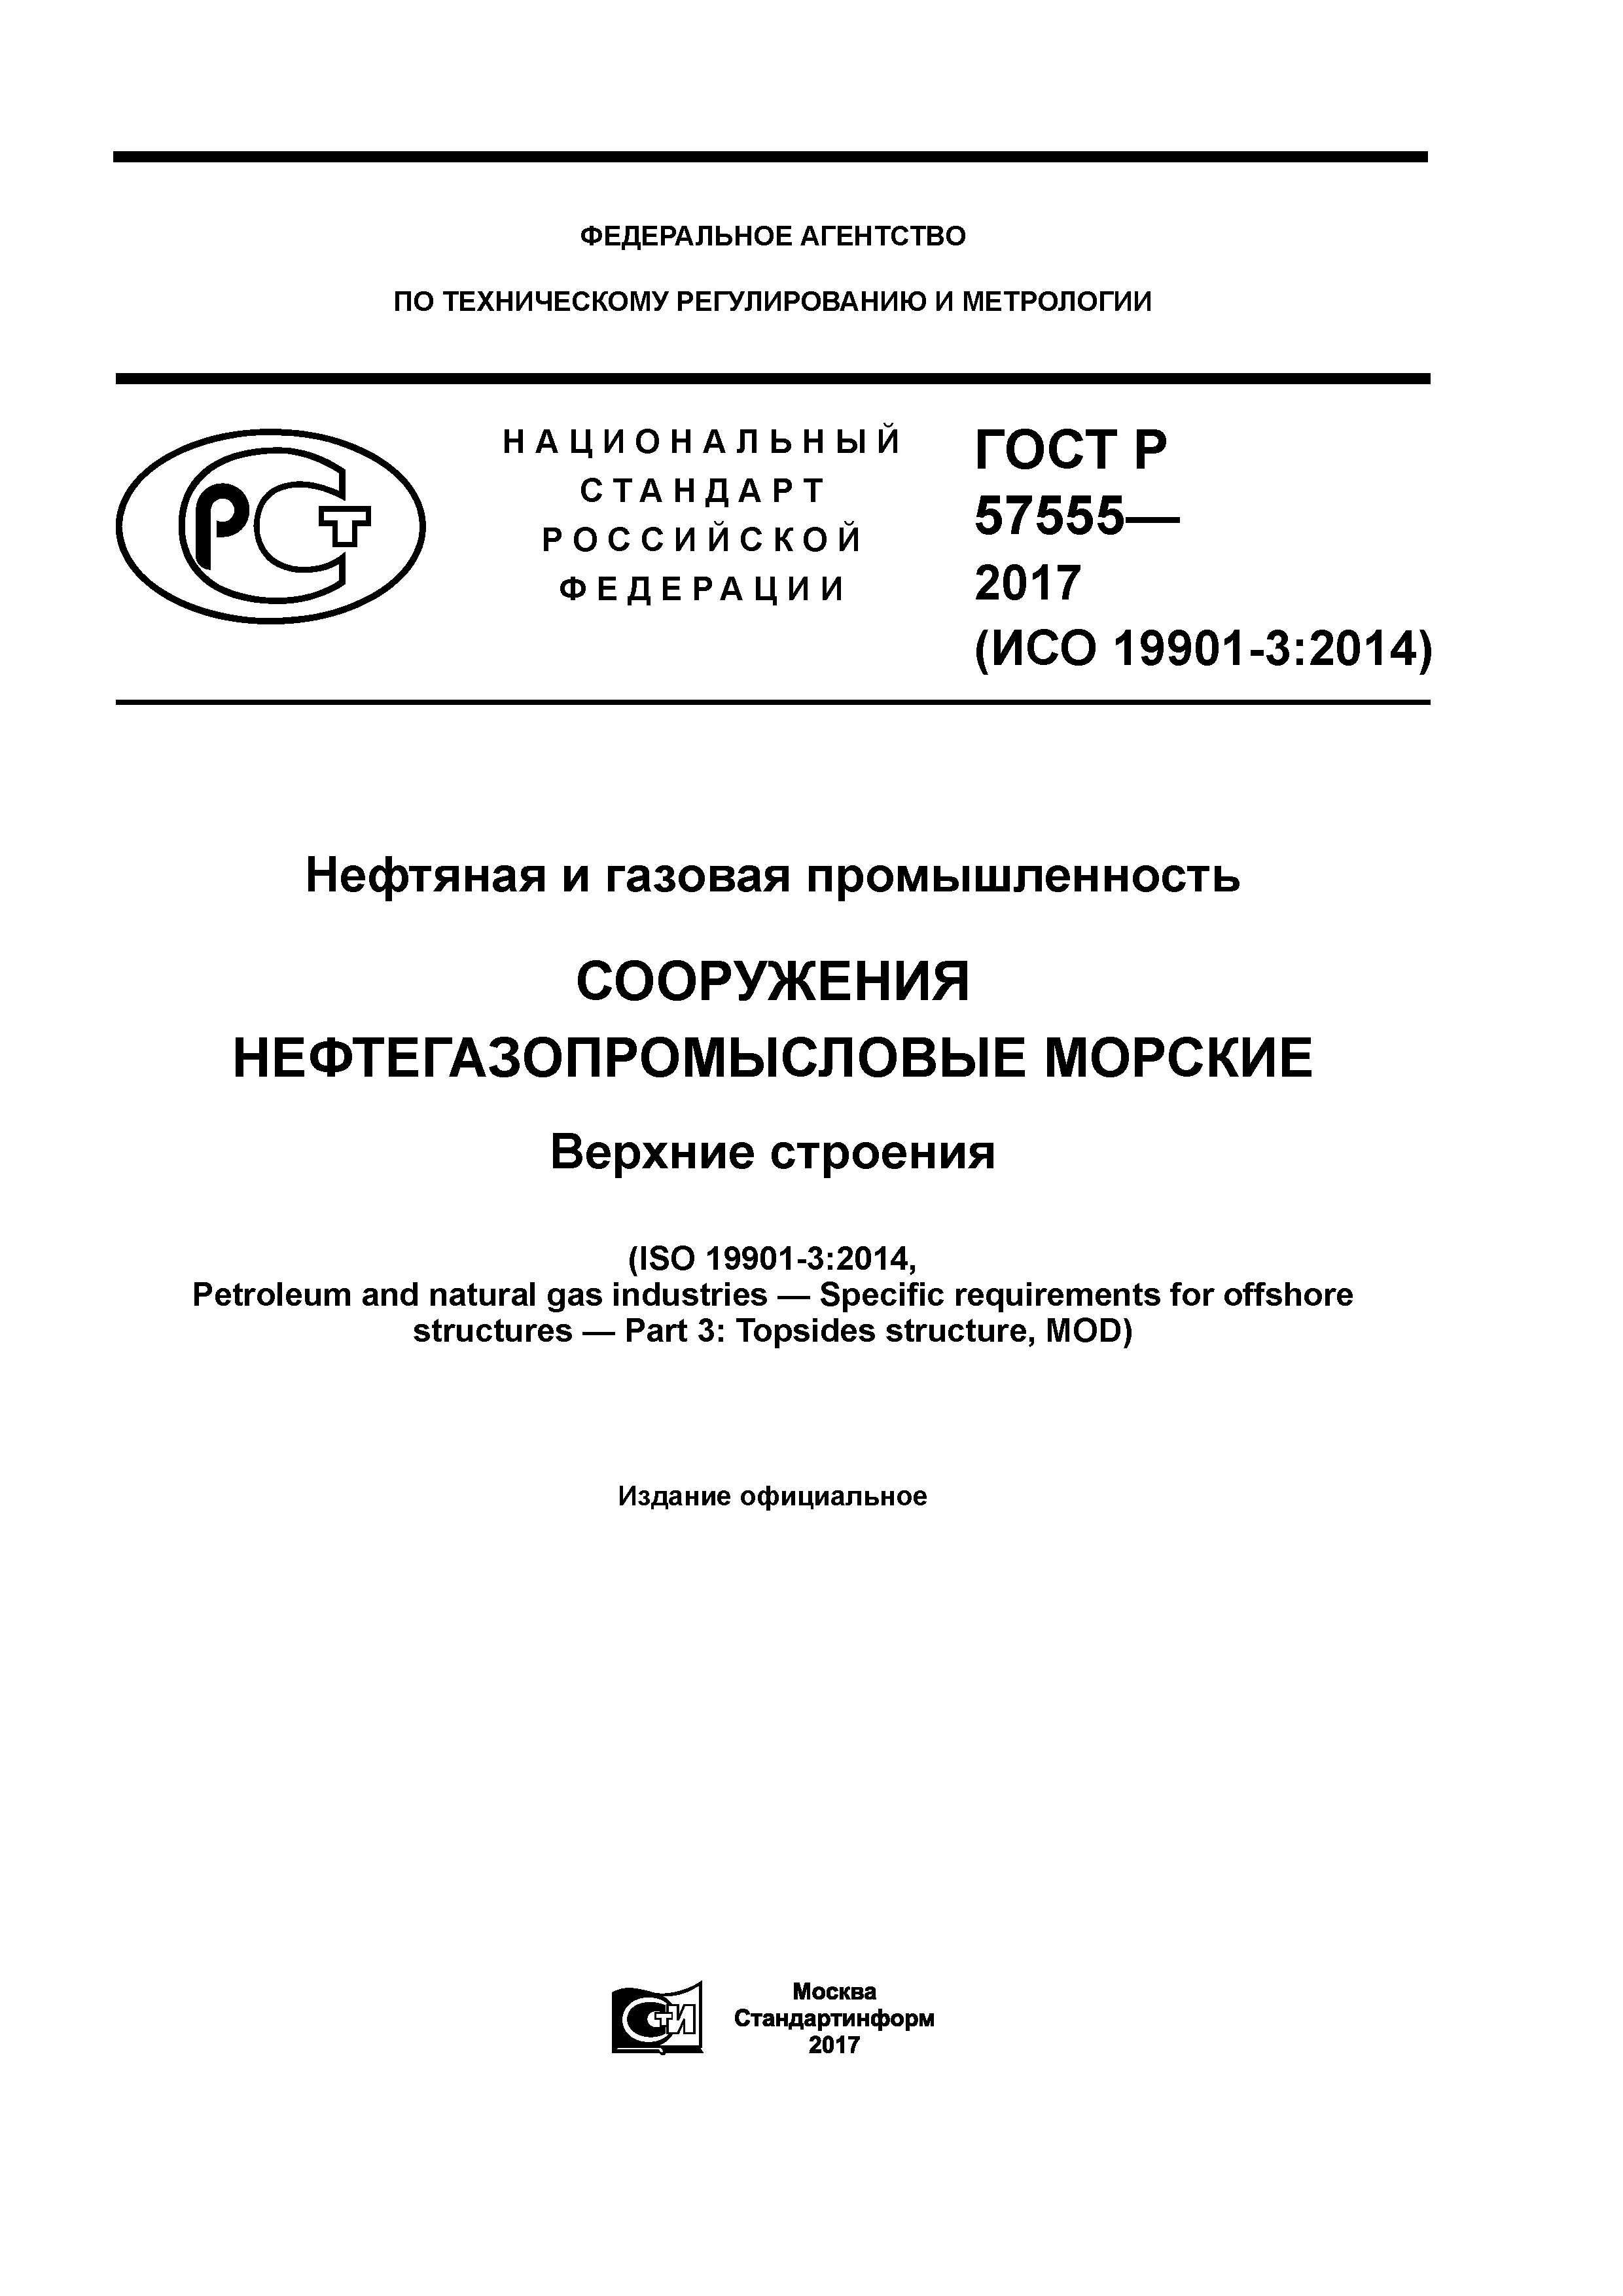 ГОСТ Р 57555-2017